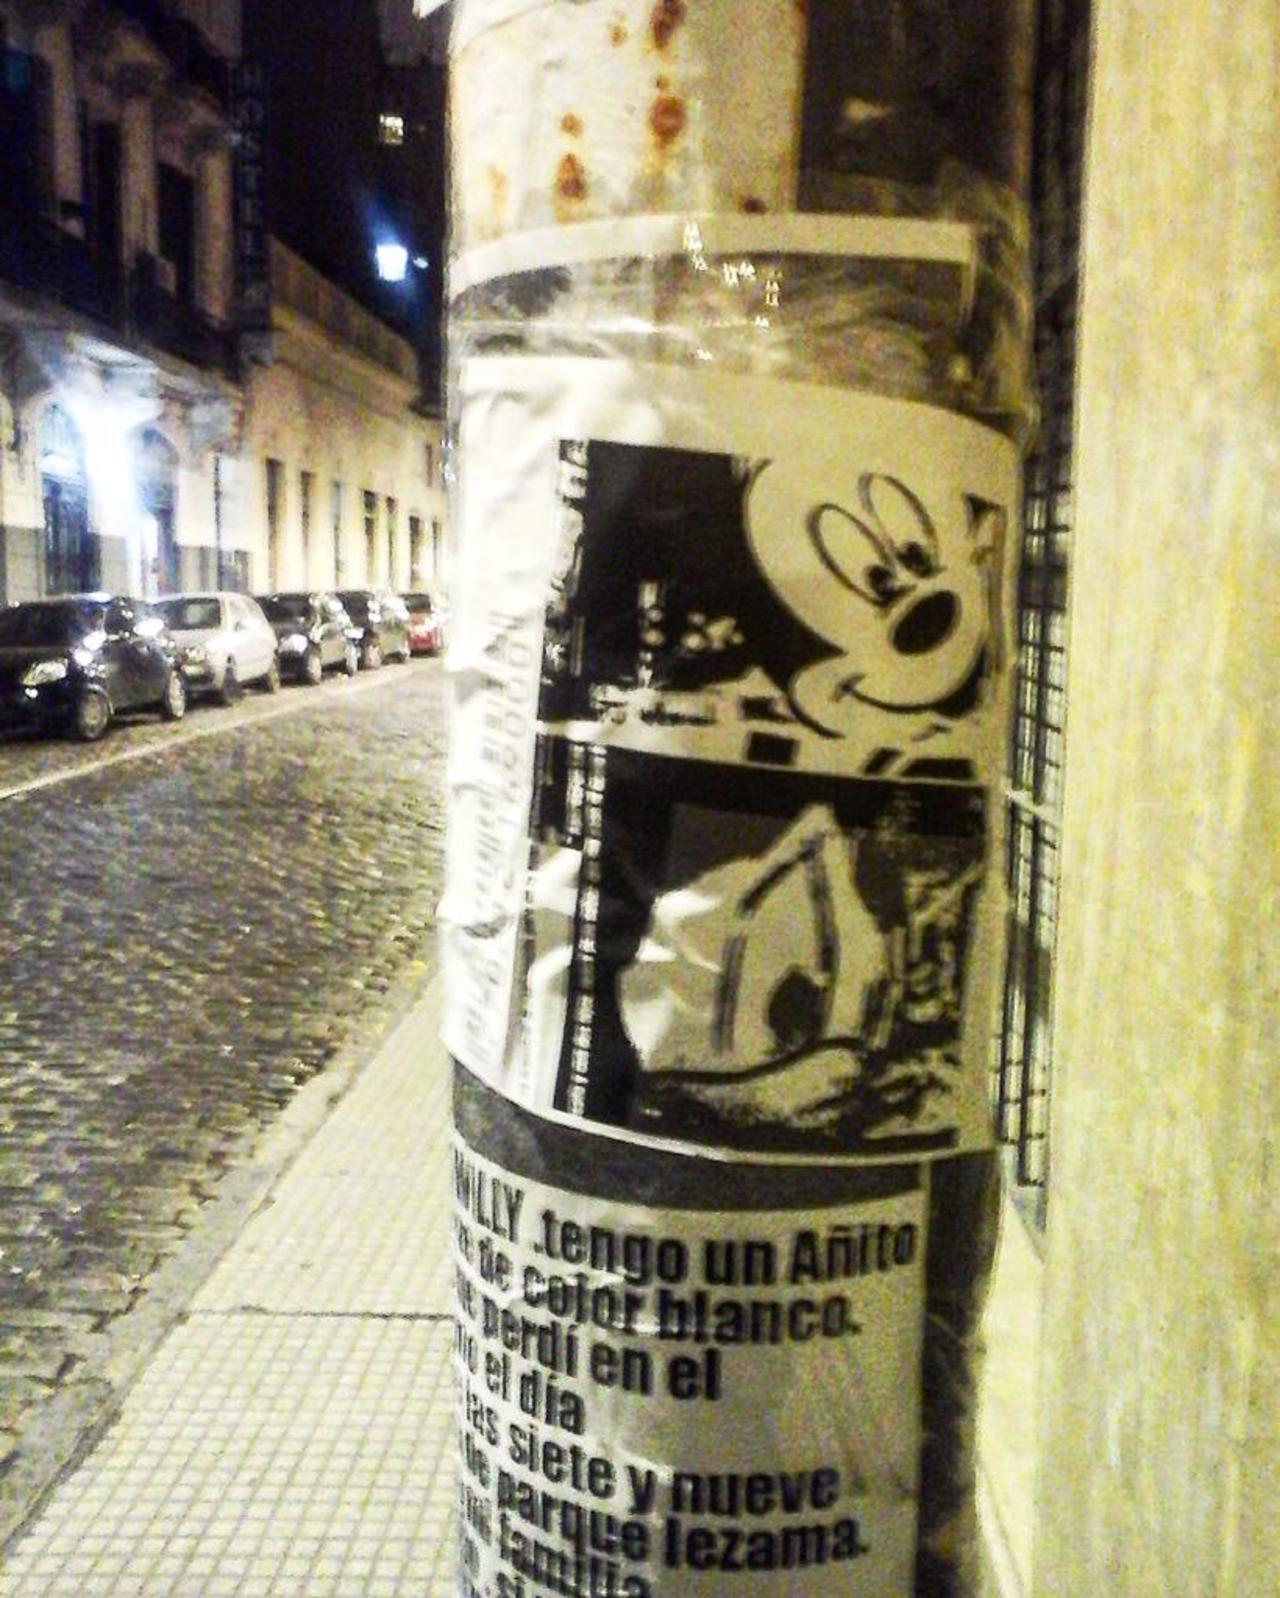 #stickers #stickerart #stickerbomb #punkart #collage #stencil #streetart #punkrock #streetartist #graffiti #urbanart http://t.co/GYzcOFABdD